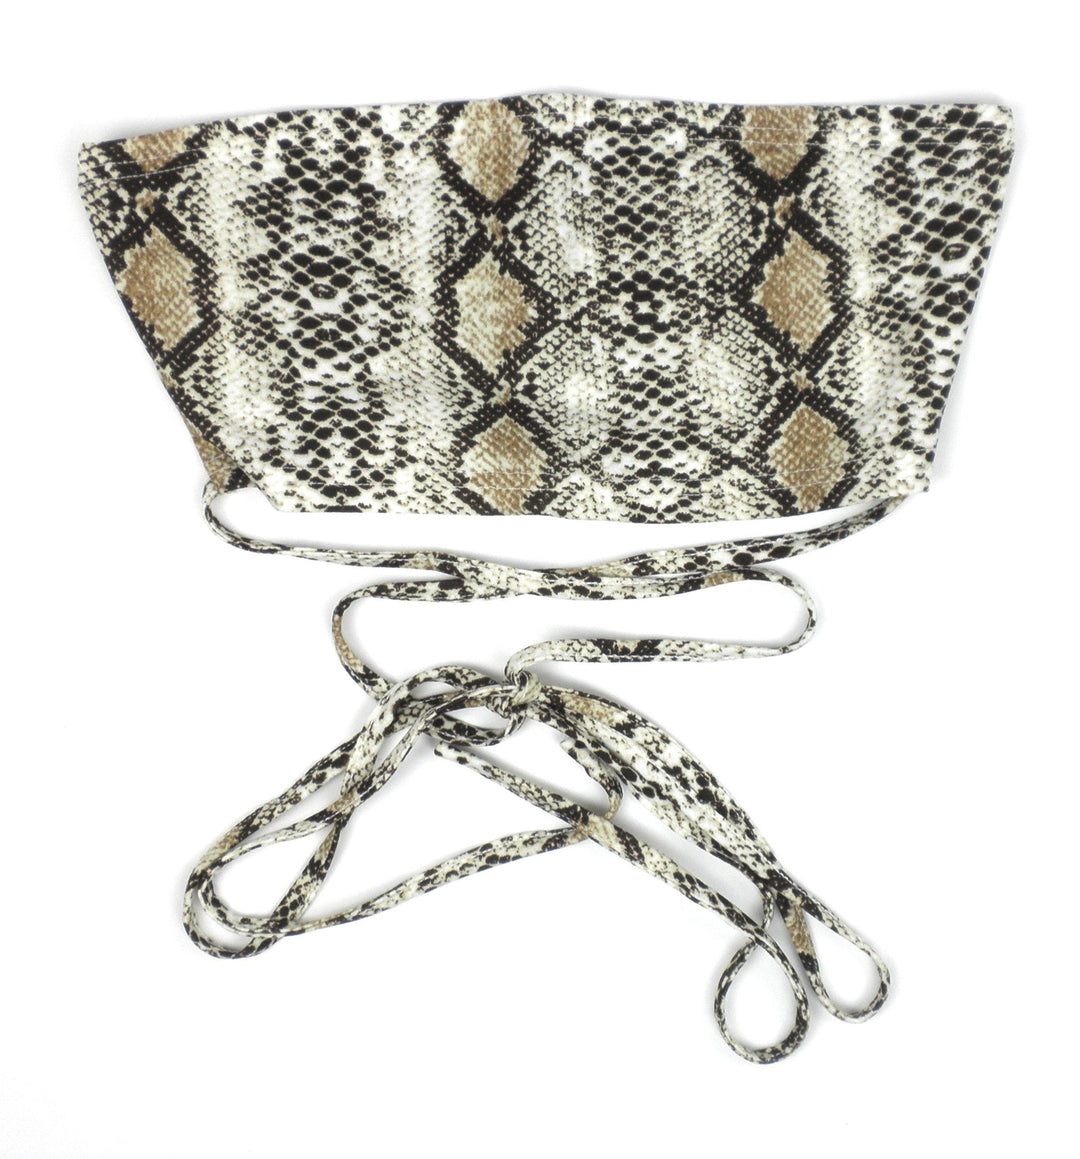 Zaful Brown Snakeskin Wrap Top - Small/Medium - The Fashion Foundation - {{ discount designer}}